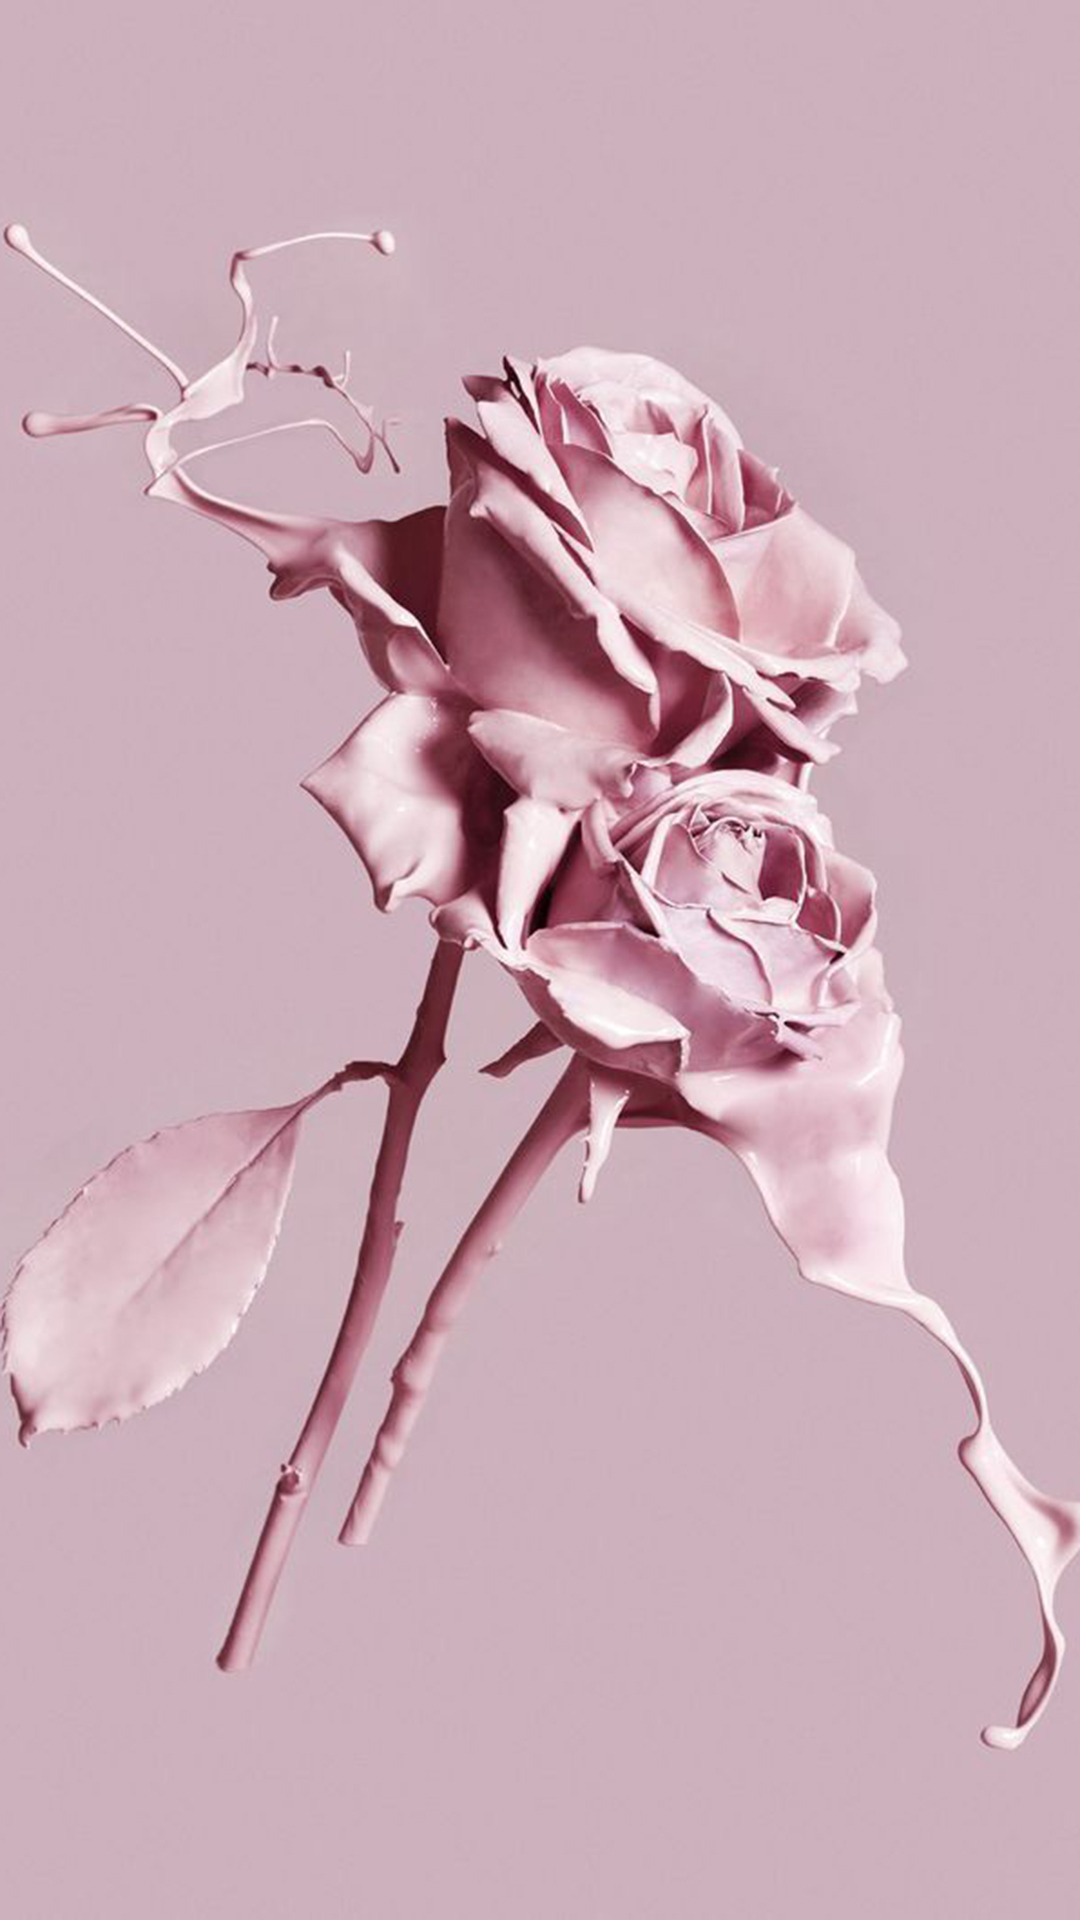 Rose Wallpaper Aesthetic Free download 